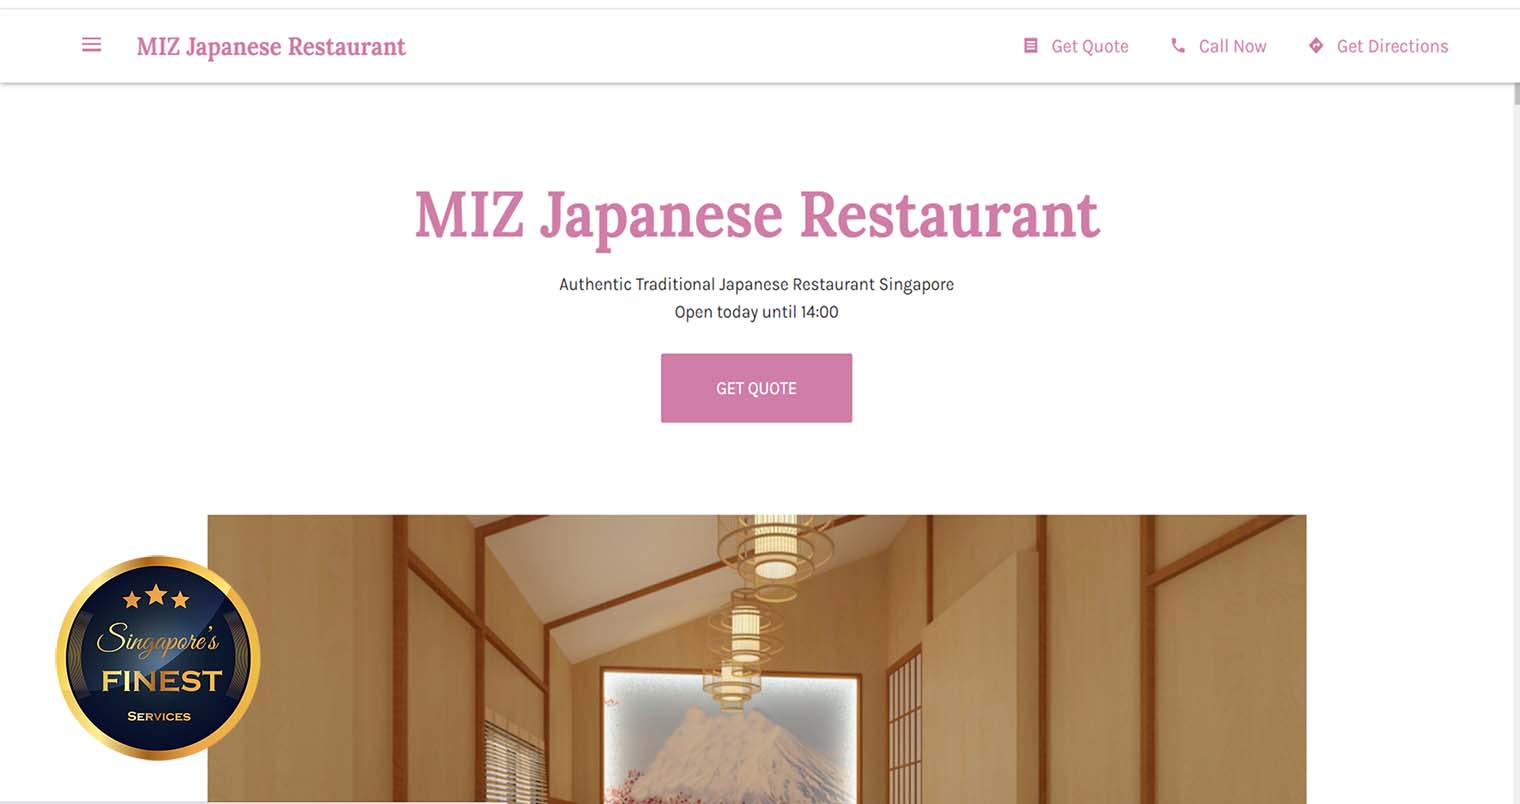 Miz Japanese Restaurant - Japanese Restaurant in Singapore